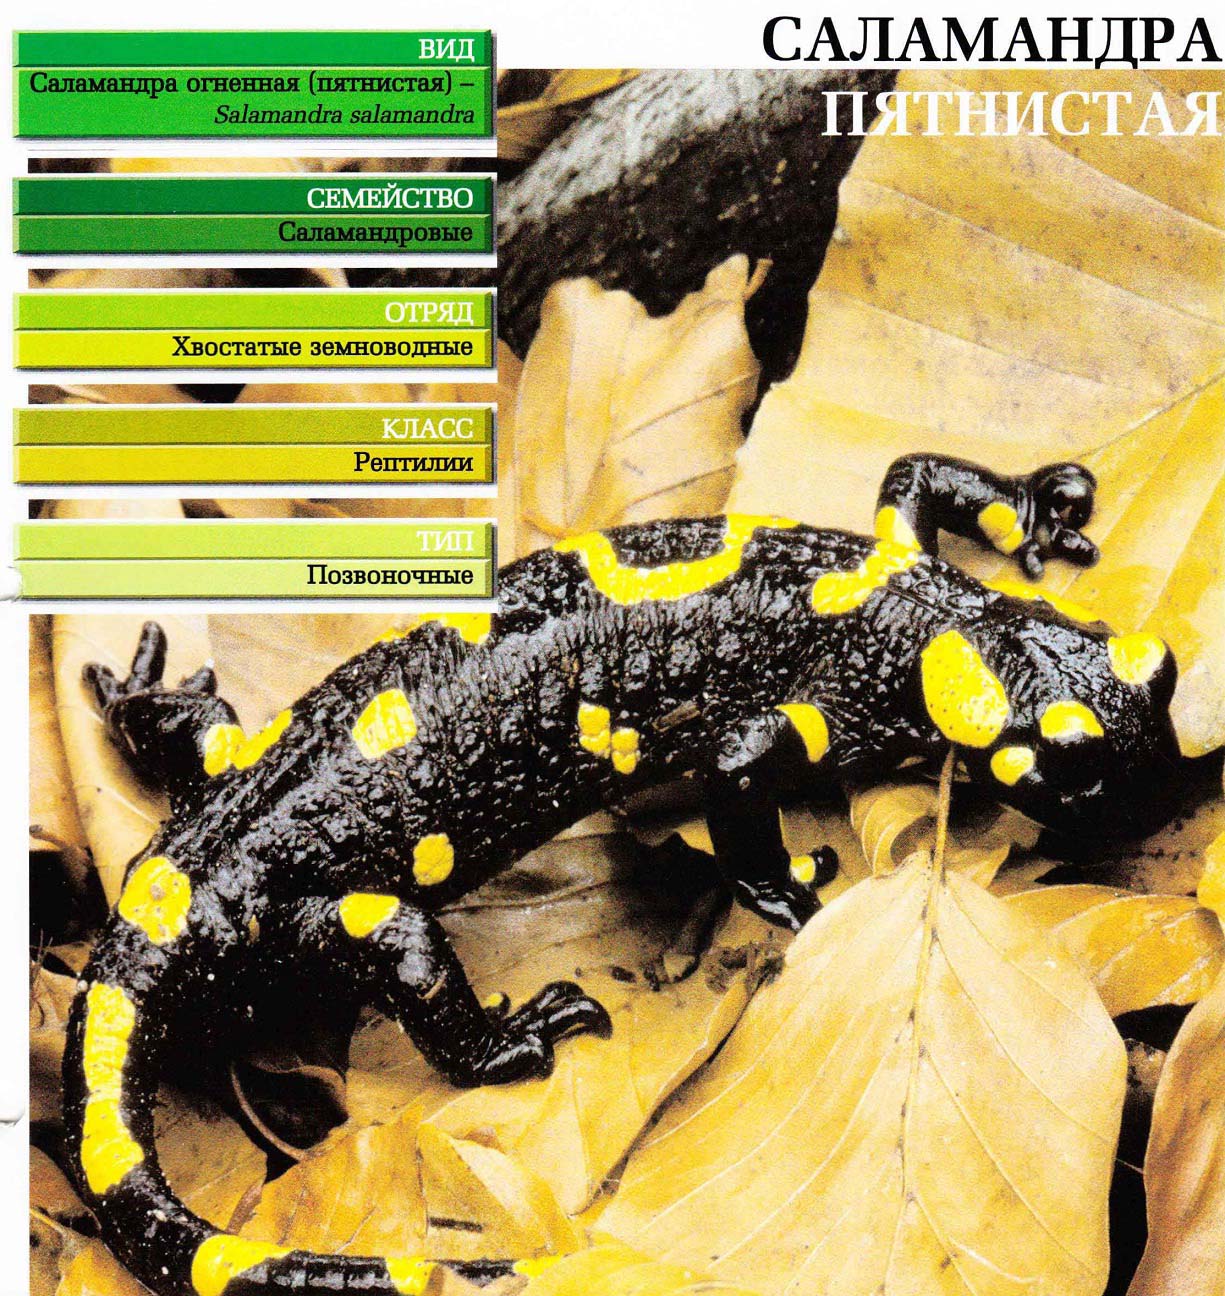 Систематика (научная классификация) саламандры пятнистой. Salamandra salamandra.